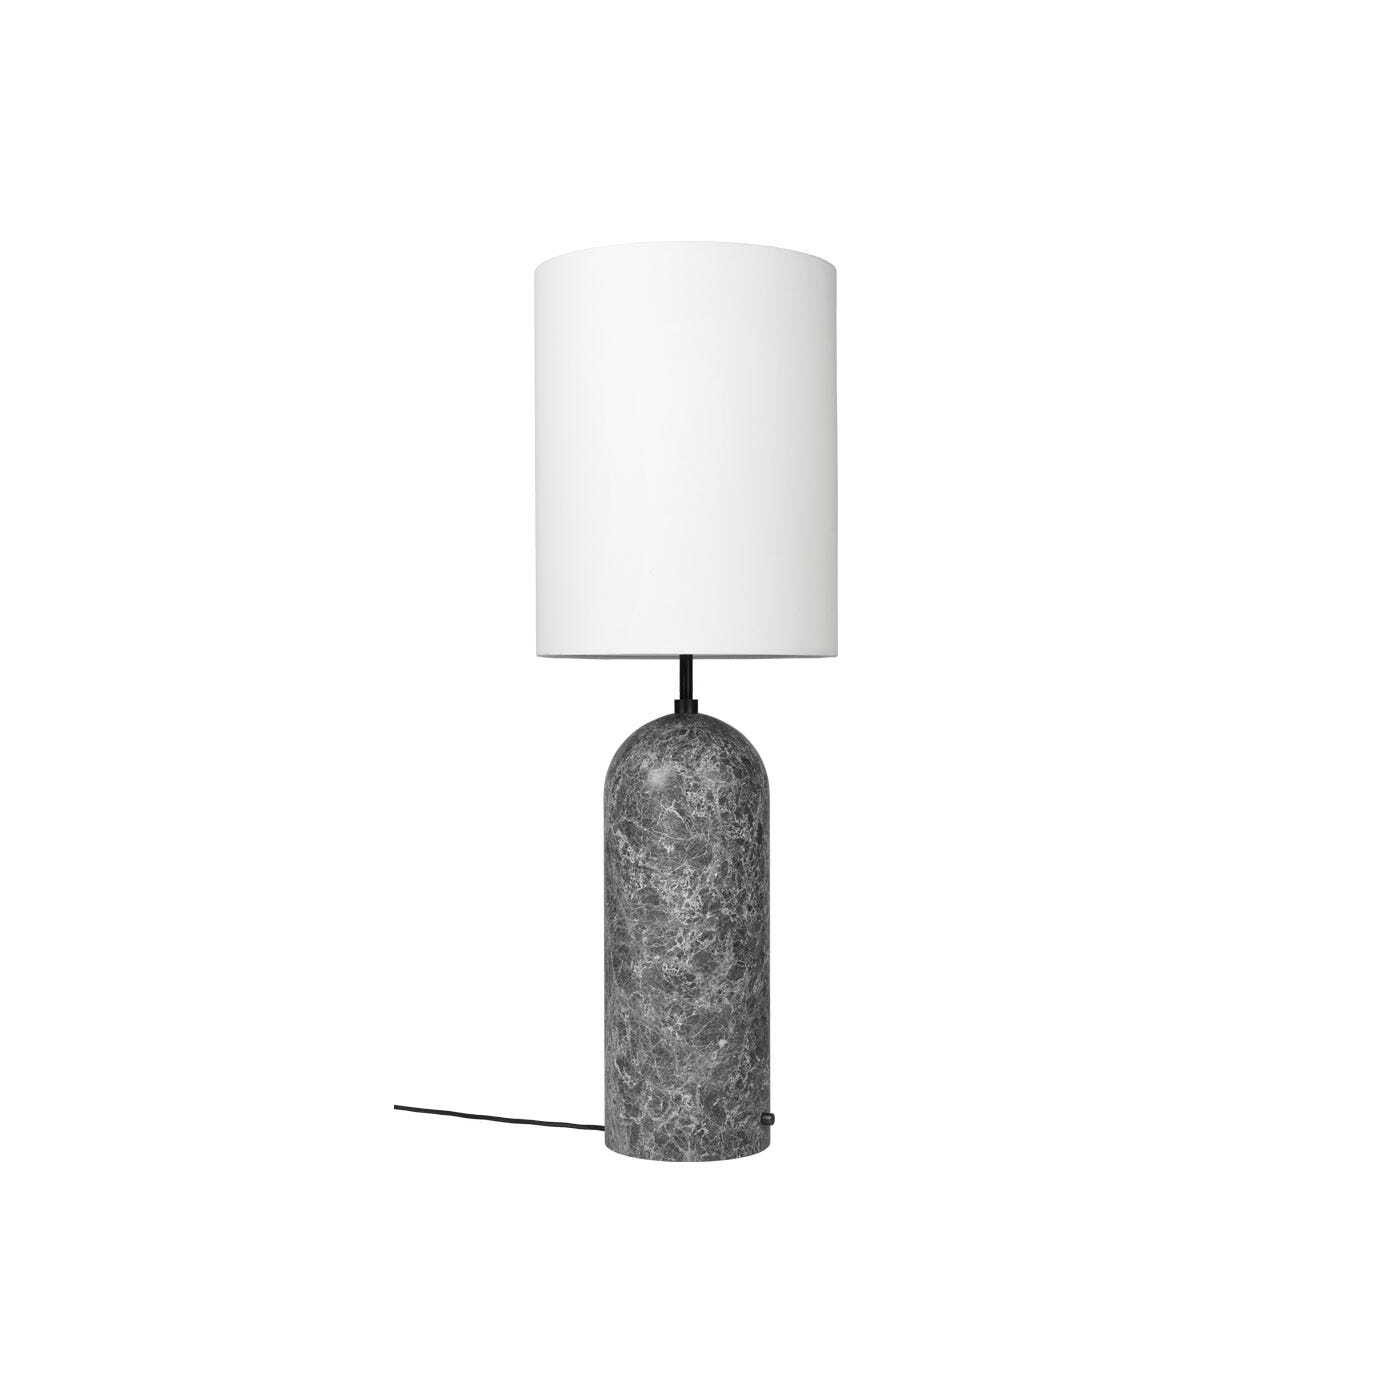 Gubi Fol19 Gravity Floor Lamp XL High Grey Marble Base White Shade - image 1